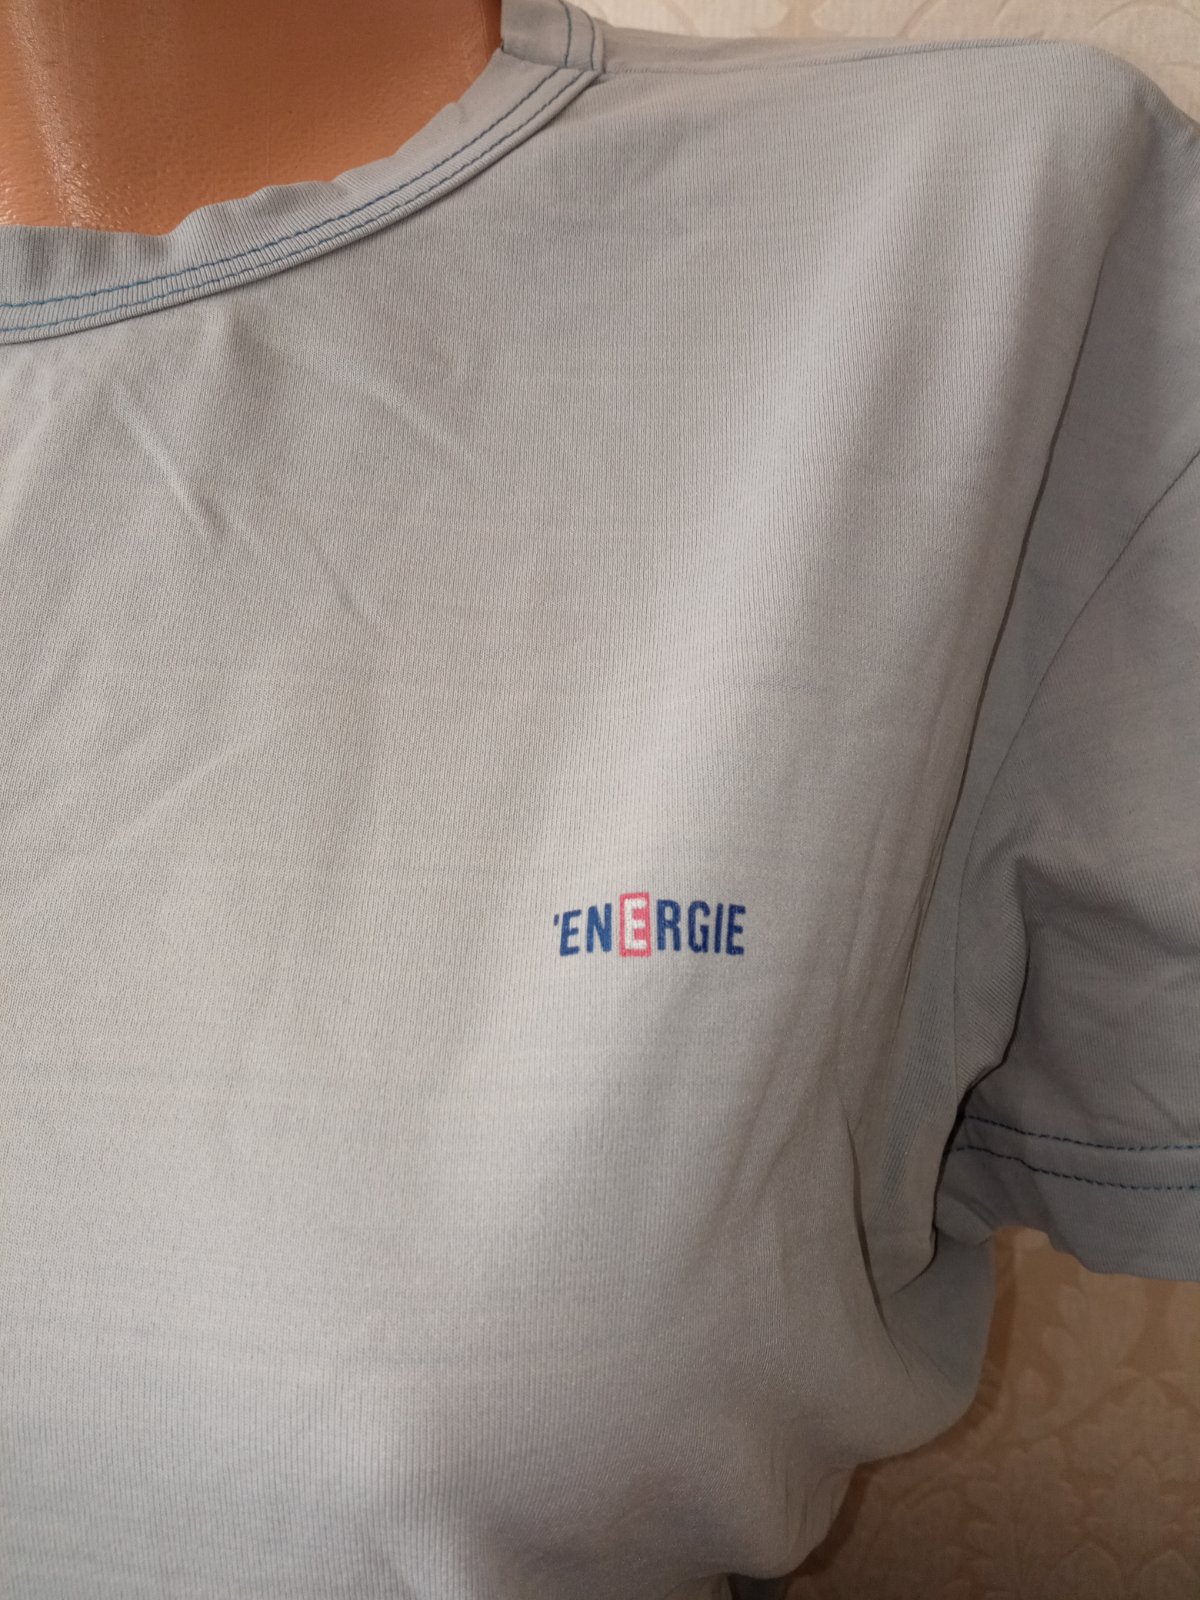 Sivé športové tričko Energie (XL)